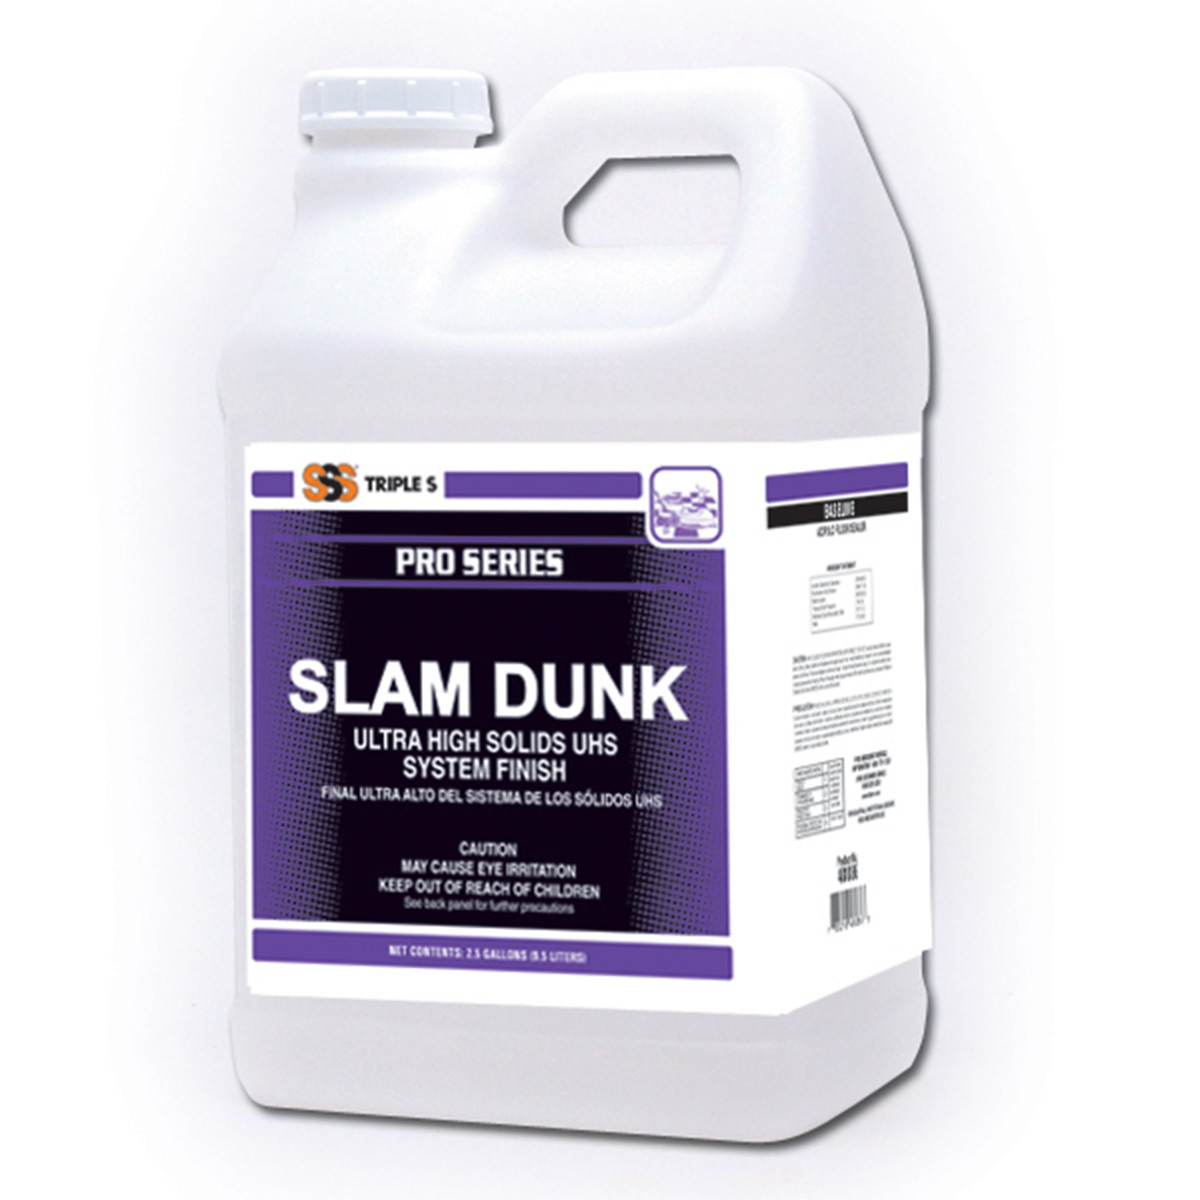 SSS Slam Dunk 25 Ultra High 
Solids Finish - (2x2.5gal)